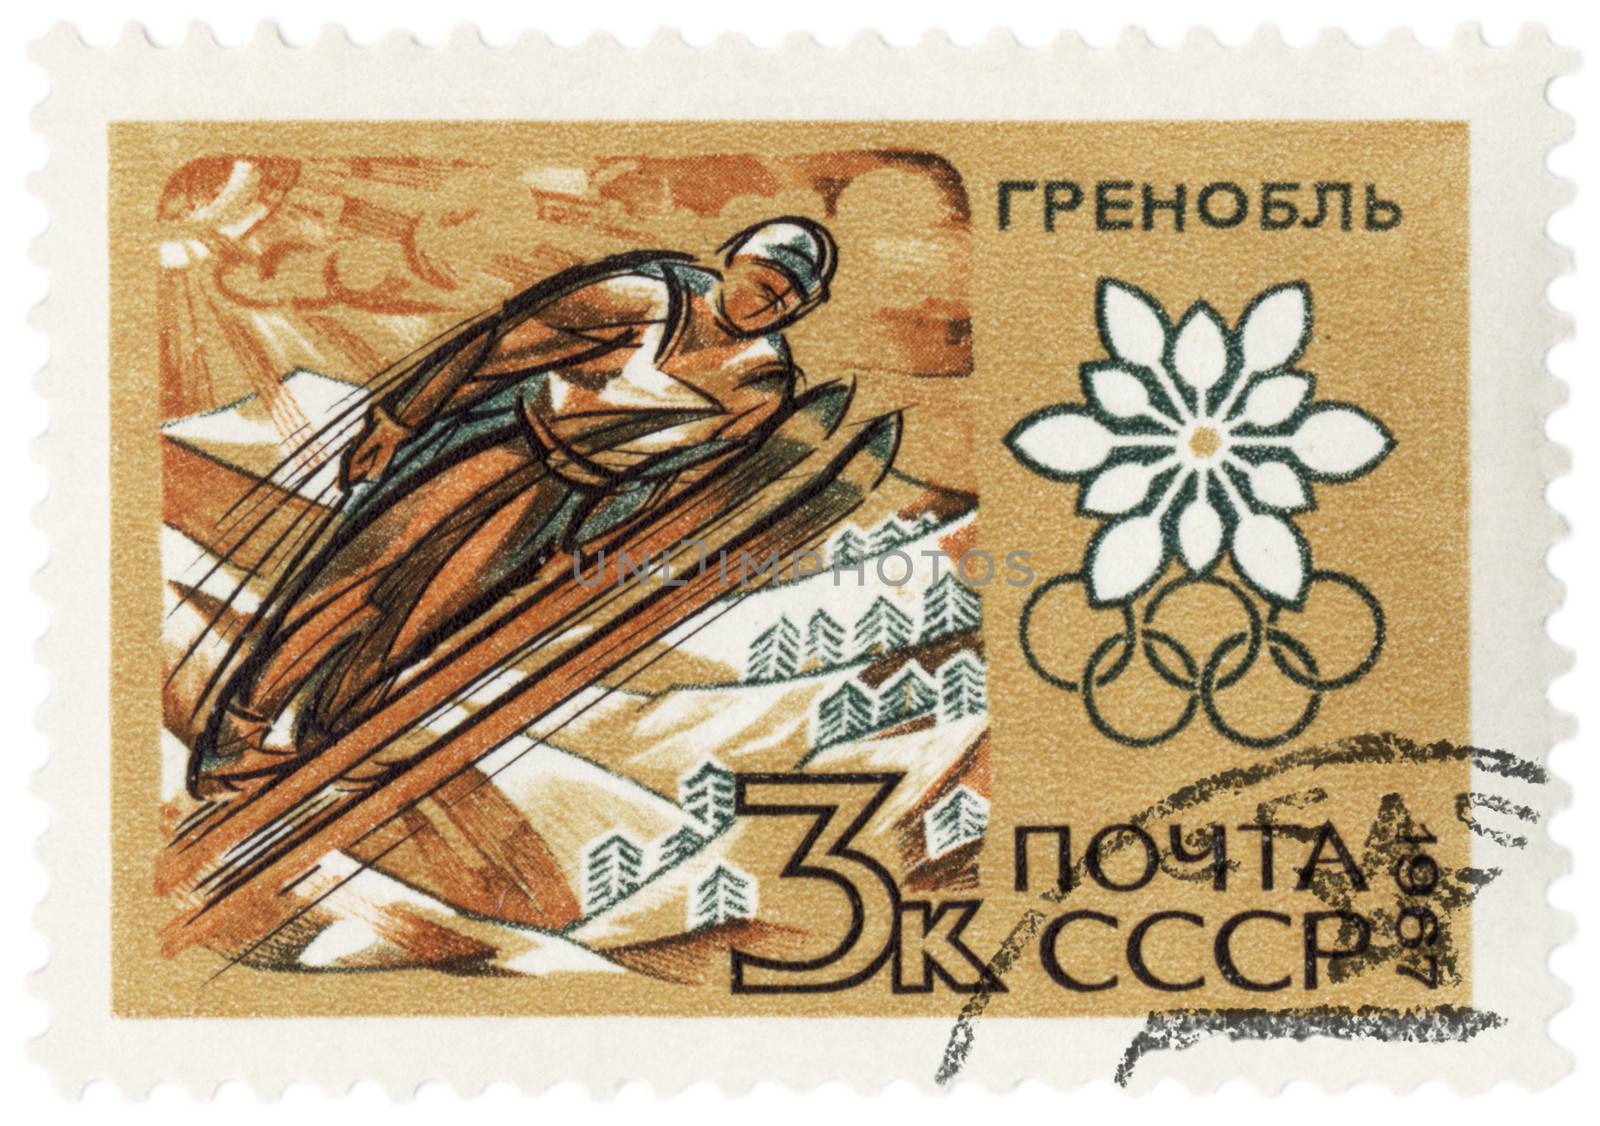 Ski jumper on post stamp by wander